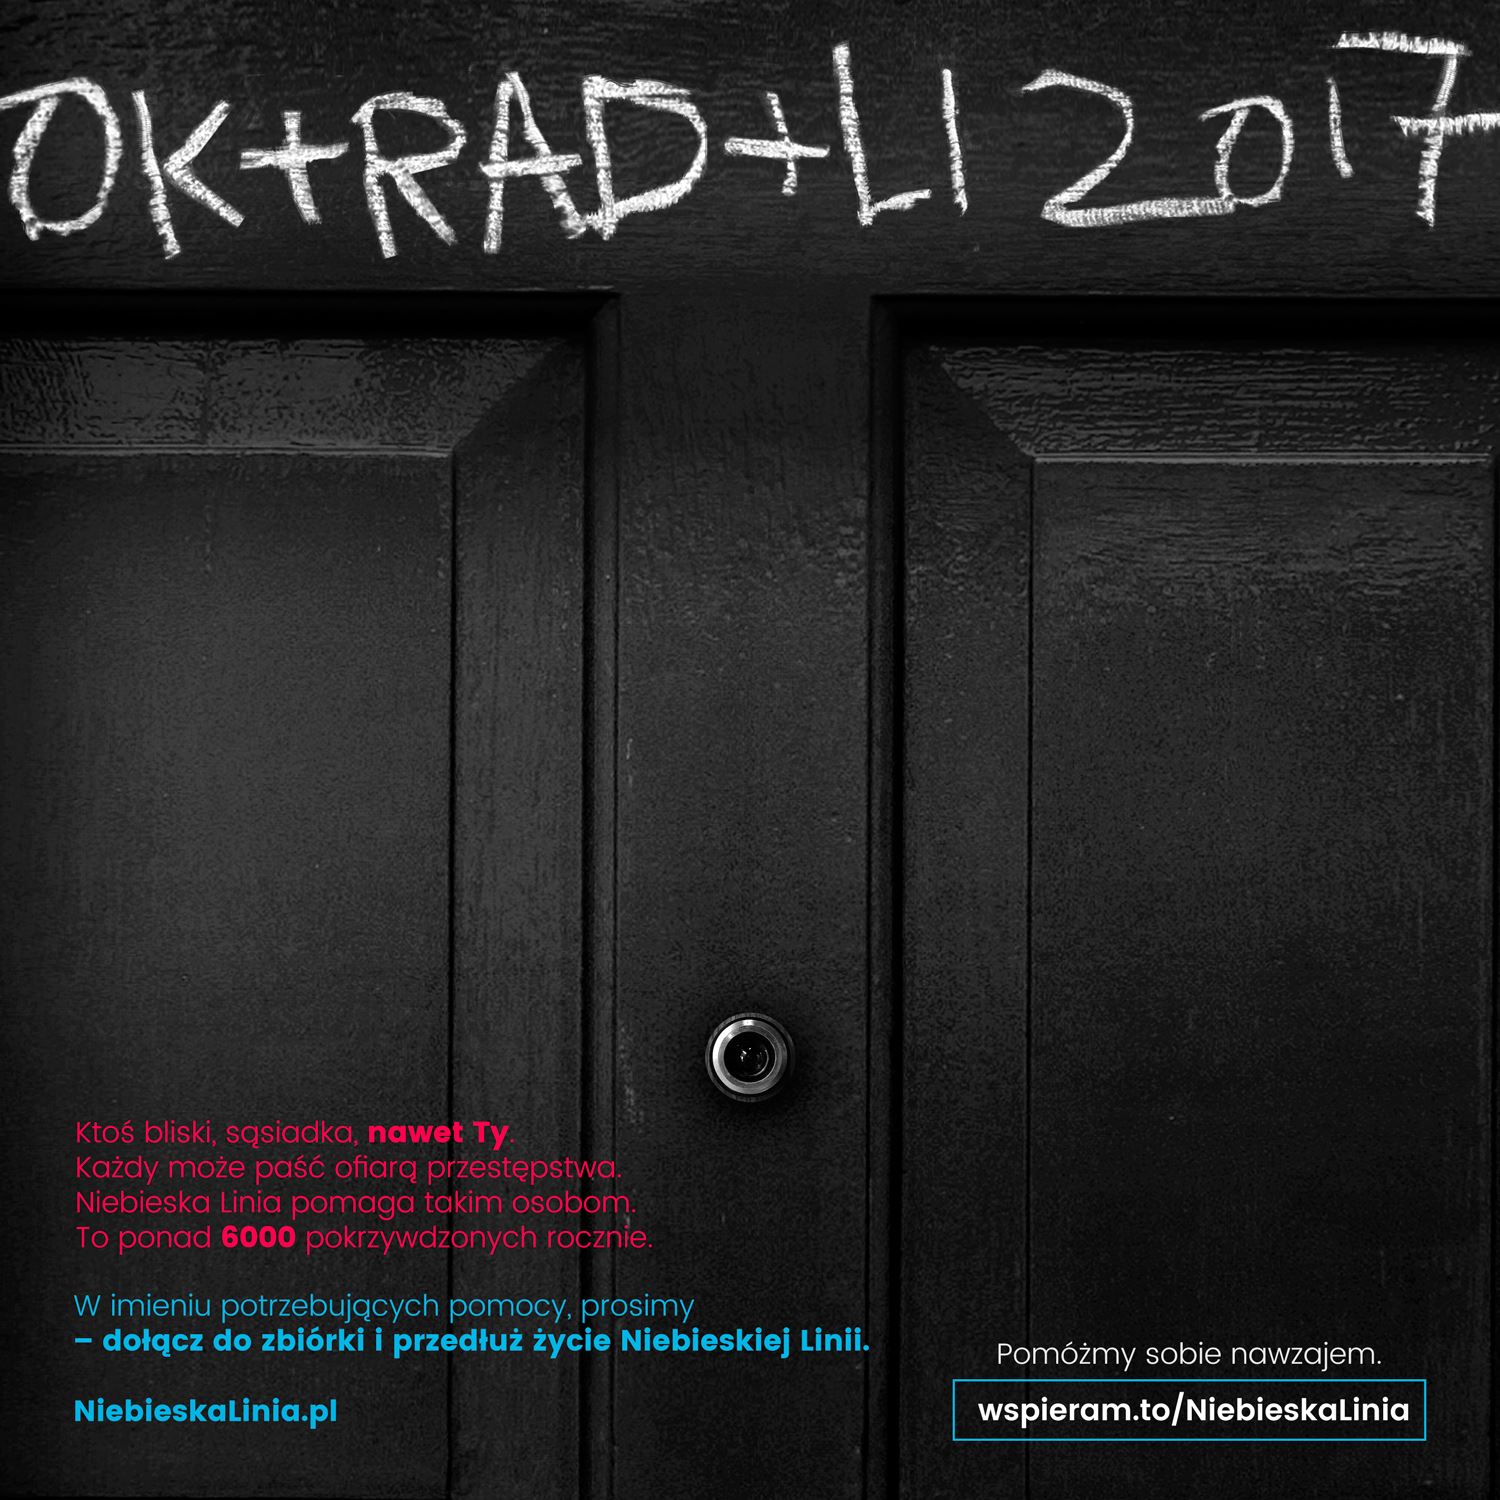 OK+RAD+LI 2017